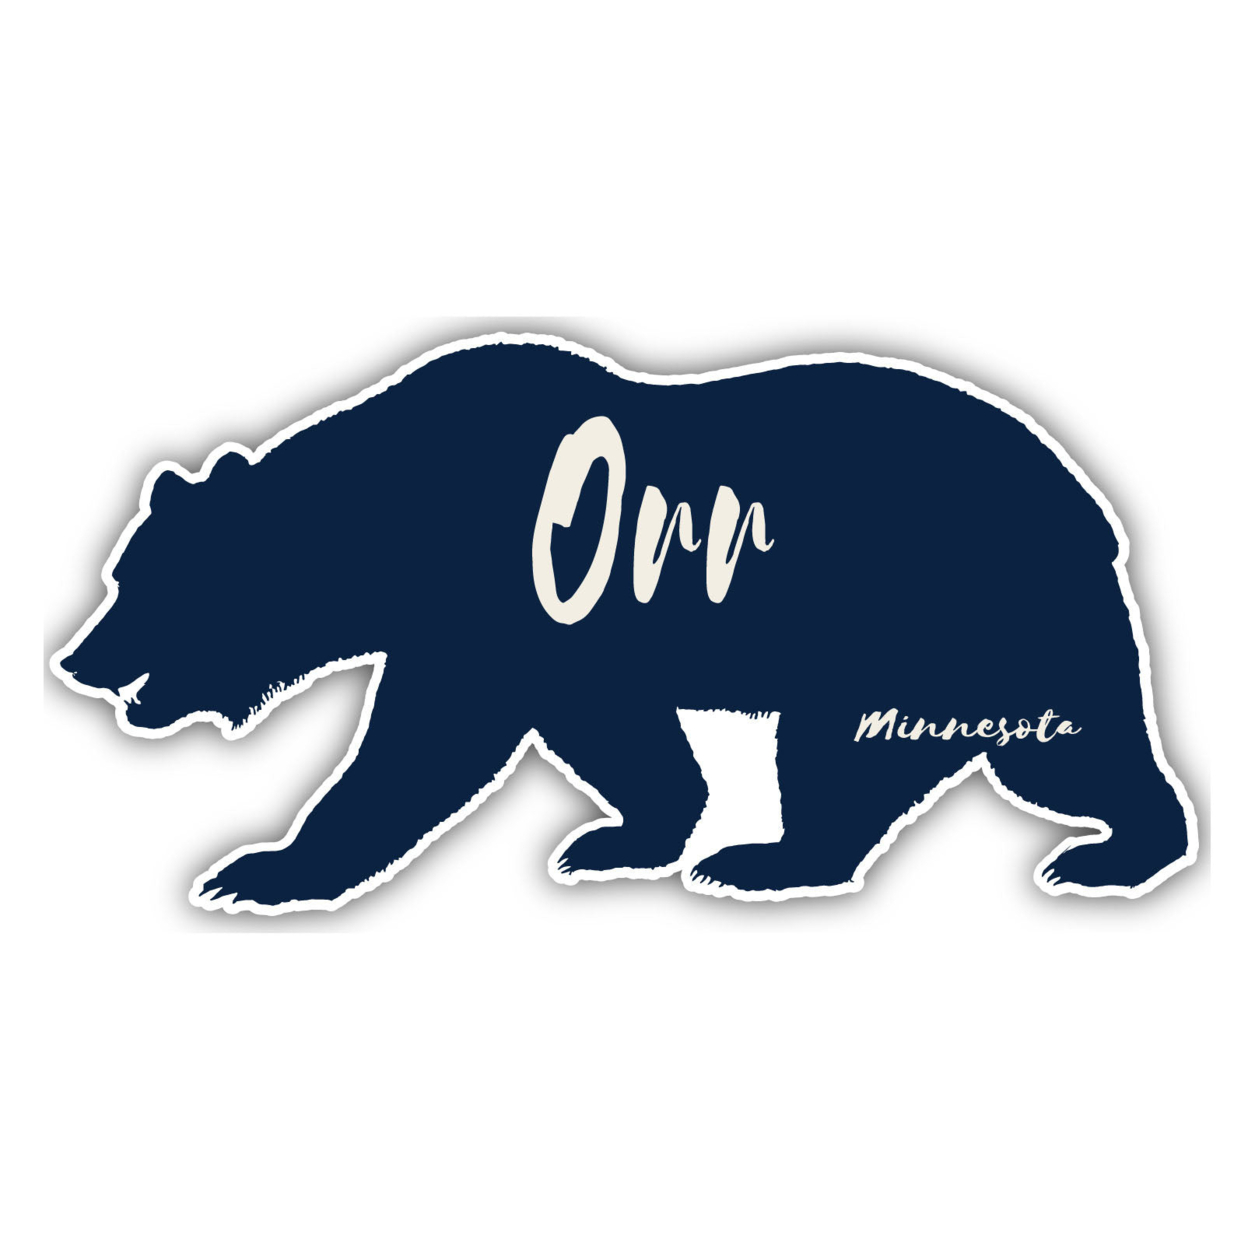 Orr Minnesota Souvenir Decorative Stickers (Choose Theme And Size) - Single Unit, 4-Inch, Bear